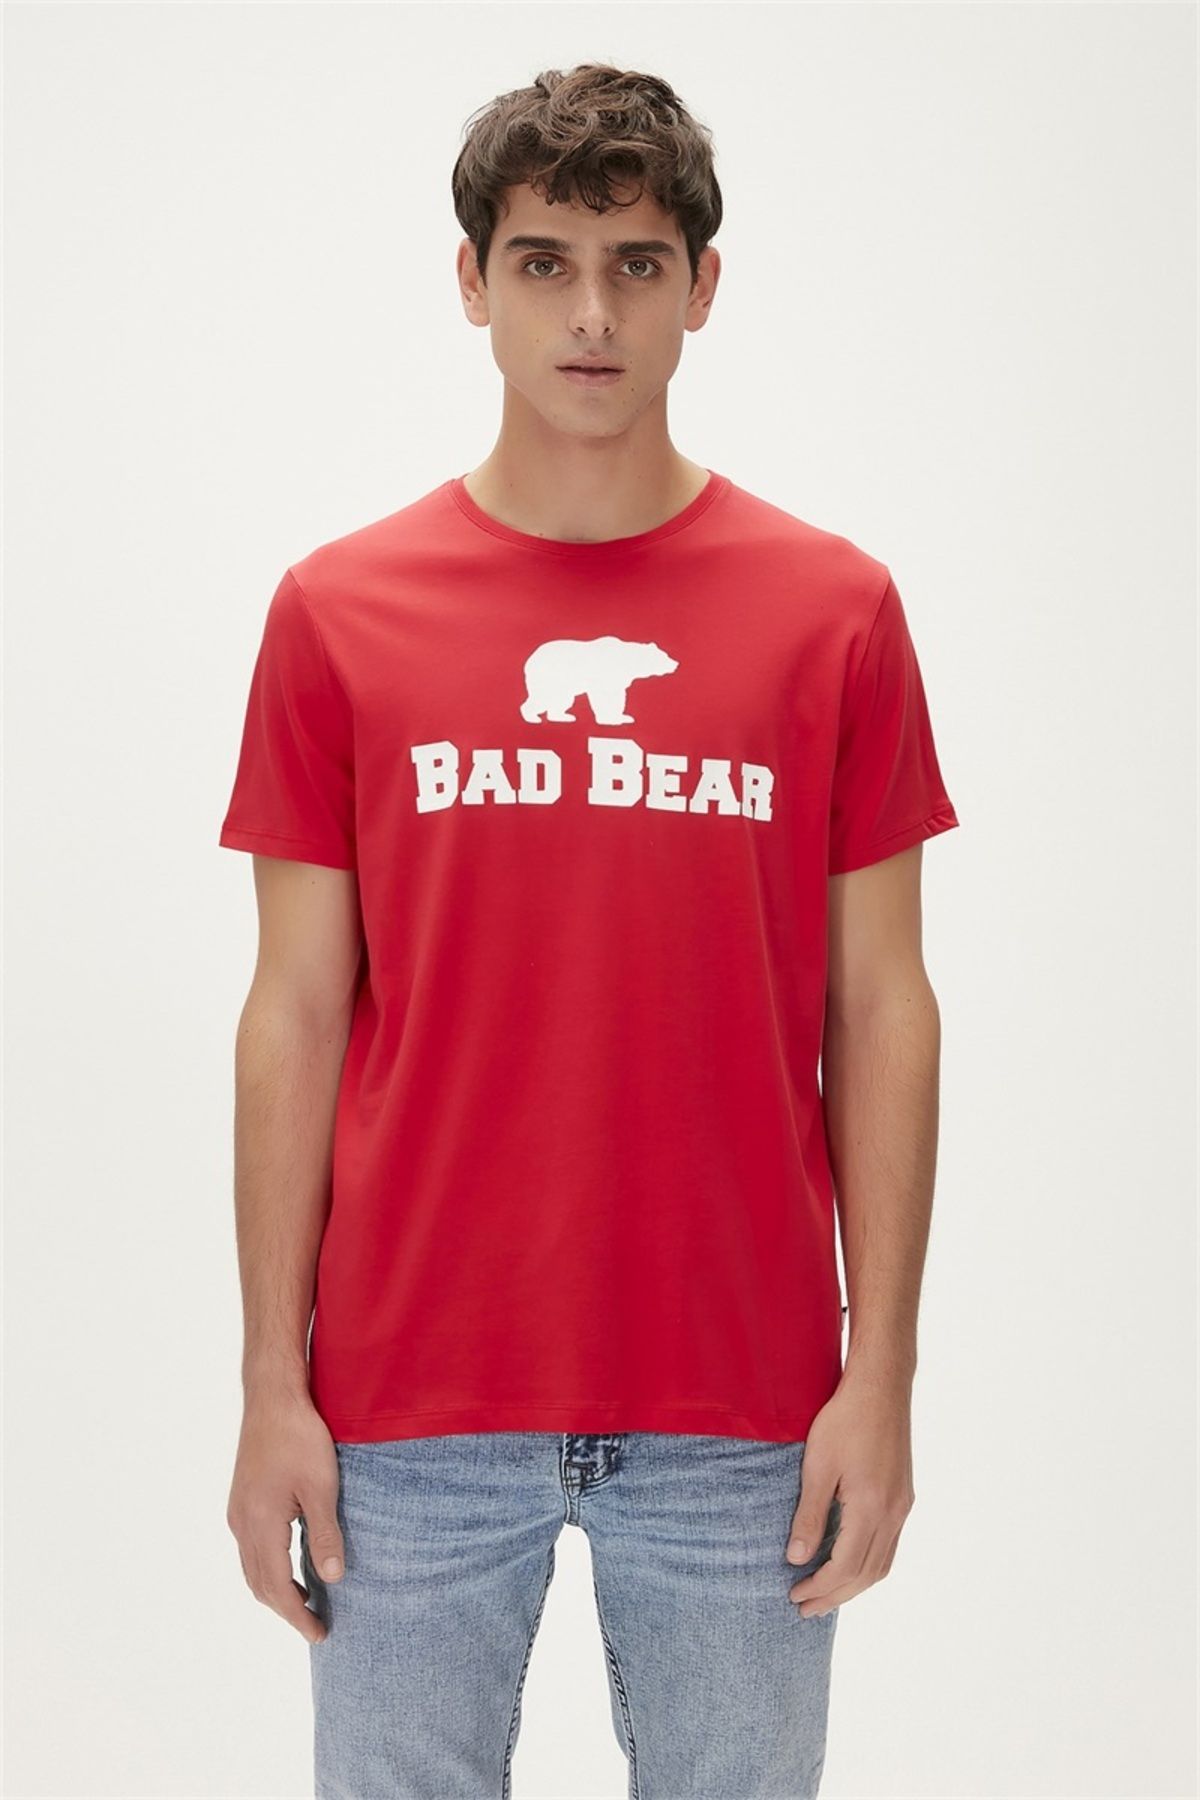 Bad Bear Tee Erkek T-shirt 19.01.07.002 Crımsonred